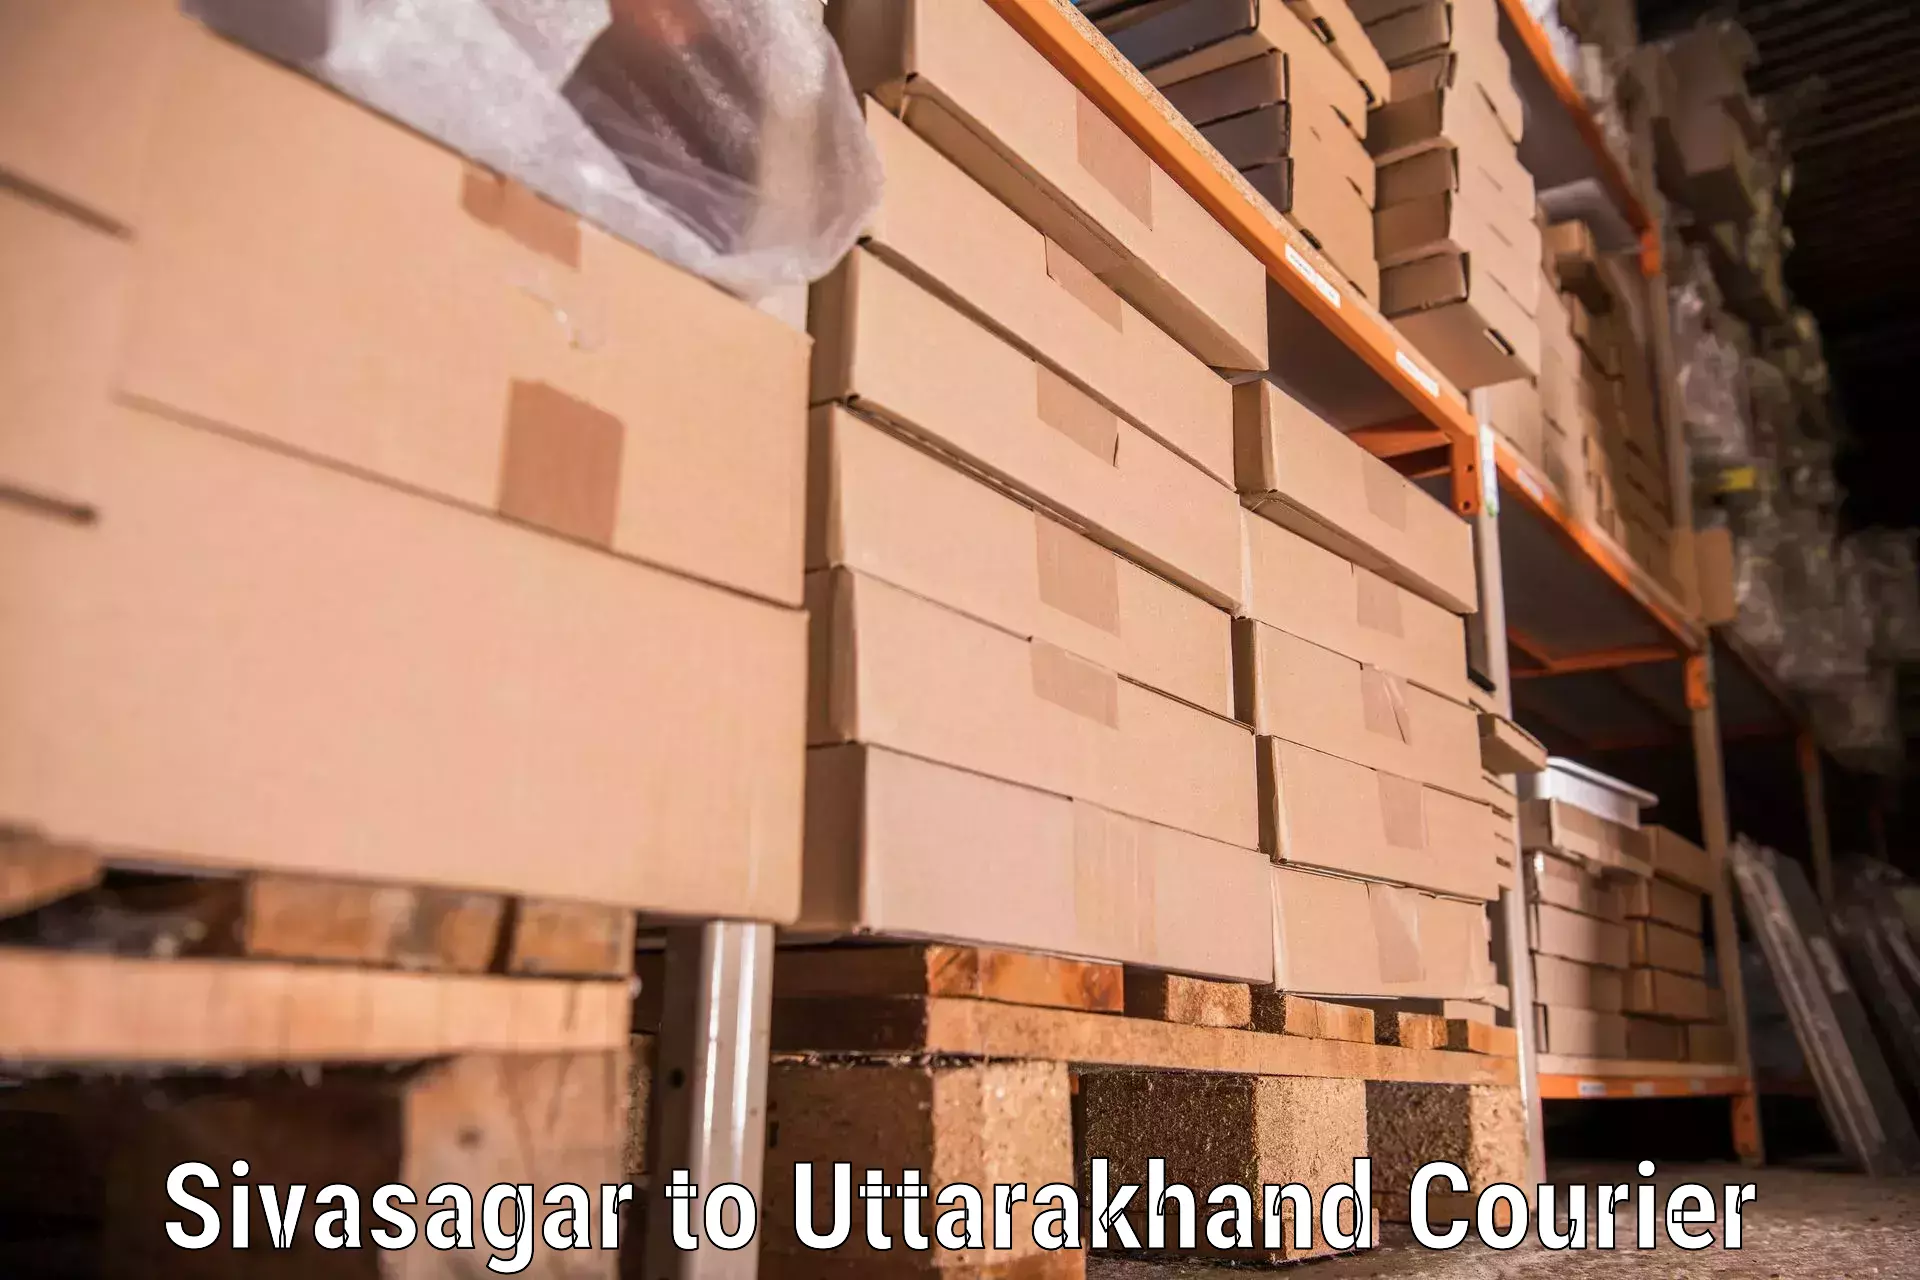 Furniture delivery service Sivasagar to Baijnath Bageshwar